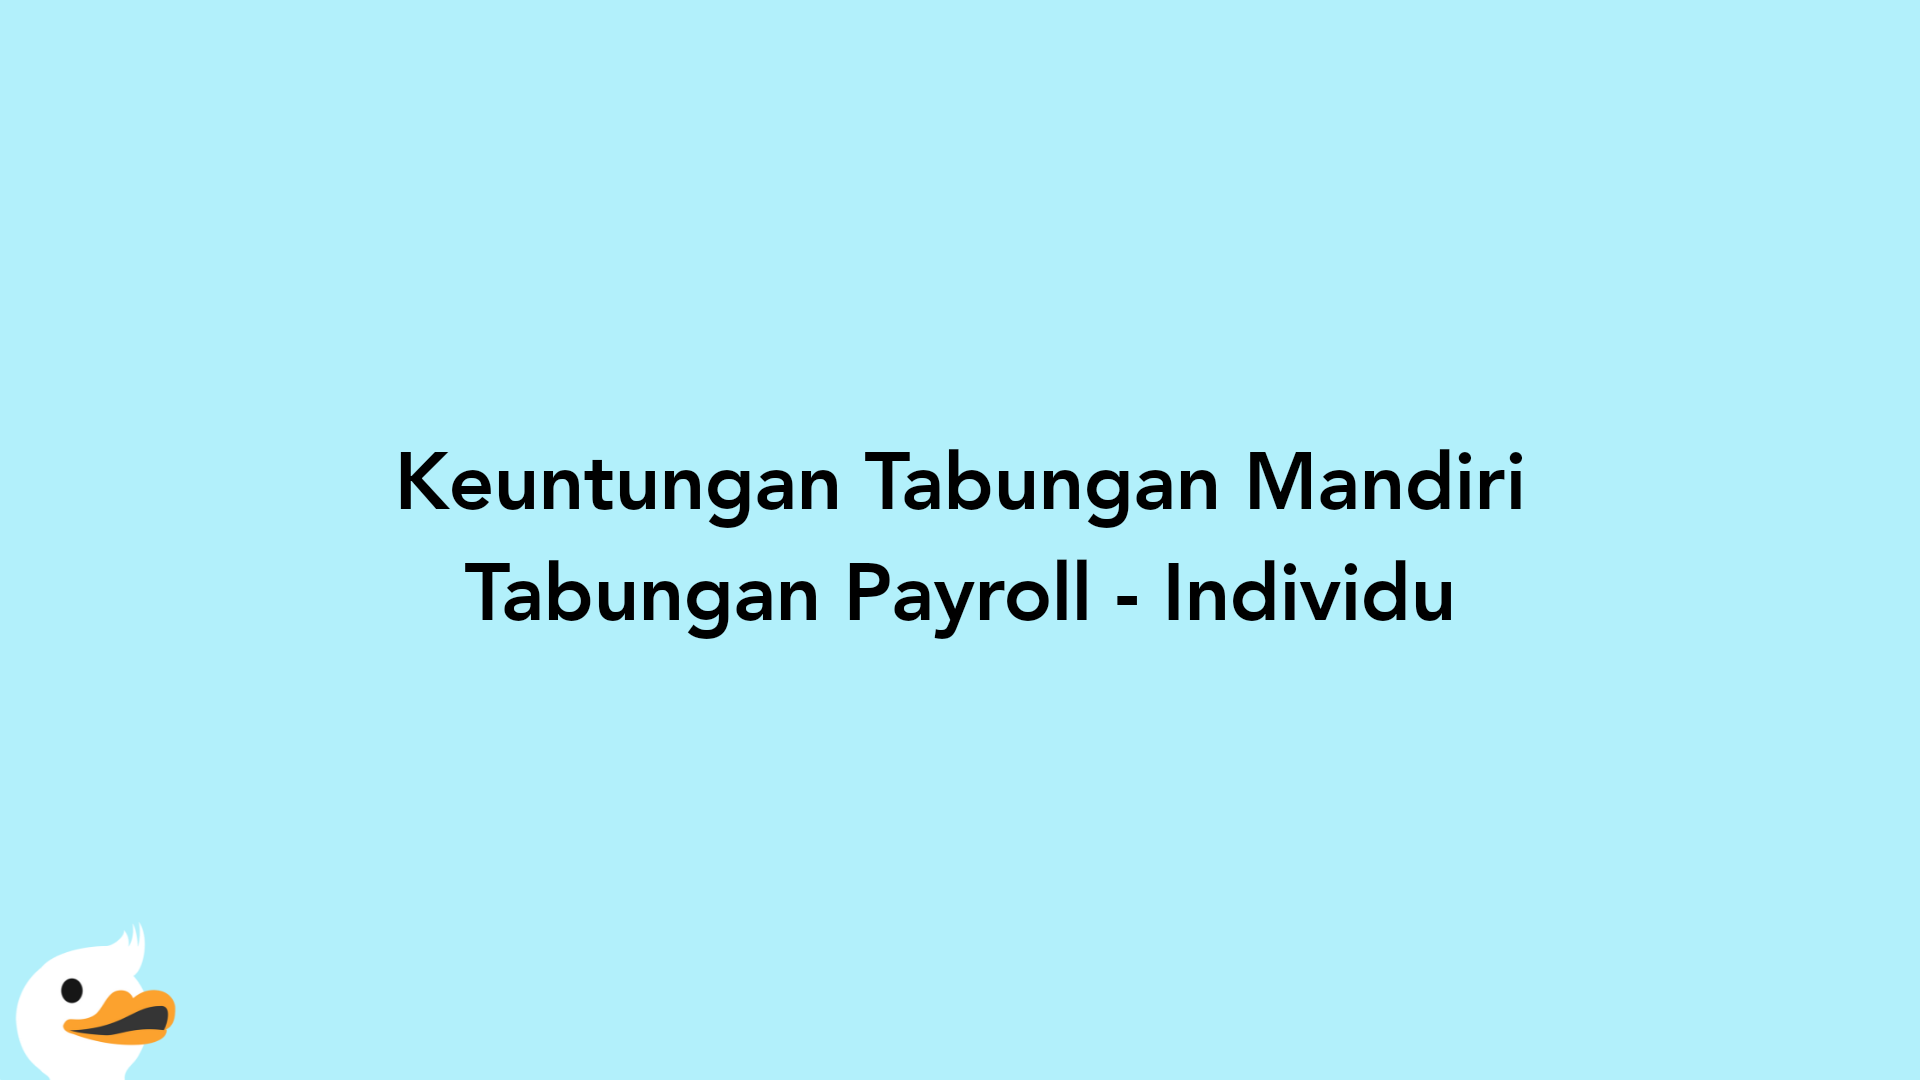 Keuntungan Tabungan Mandiri Tabungan Payroll - Individu